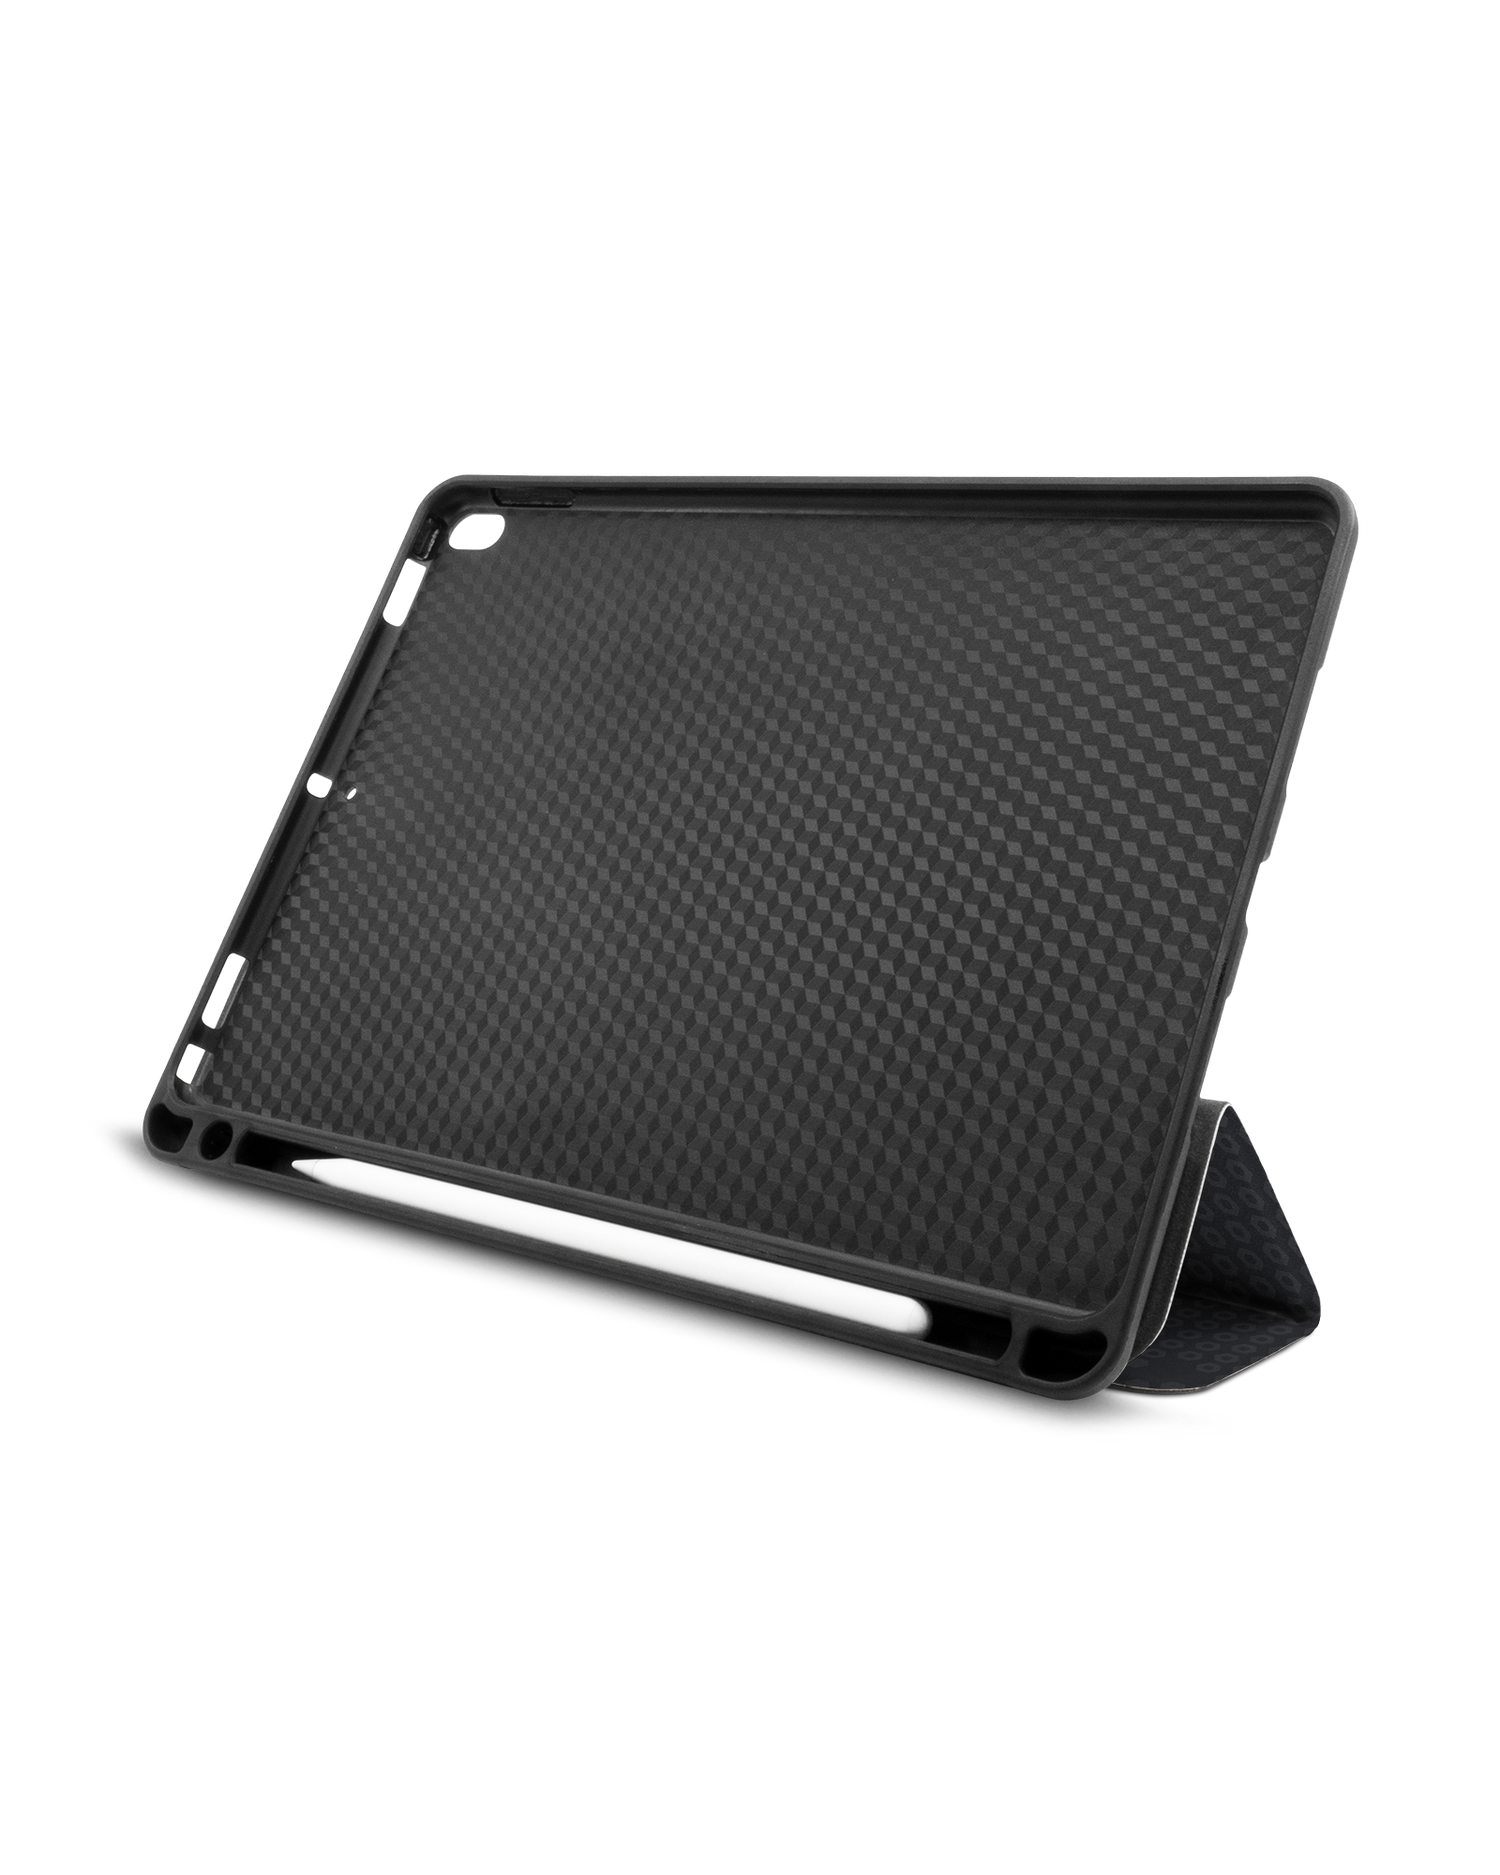 Spec Ops Dark iPad Hülle mit Stifthalter Apple iPad Pro 10.5